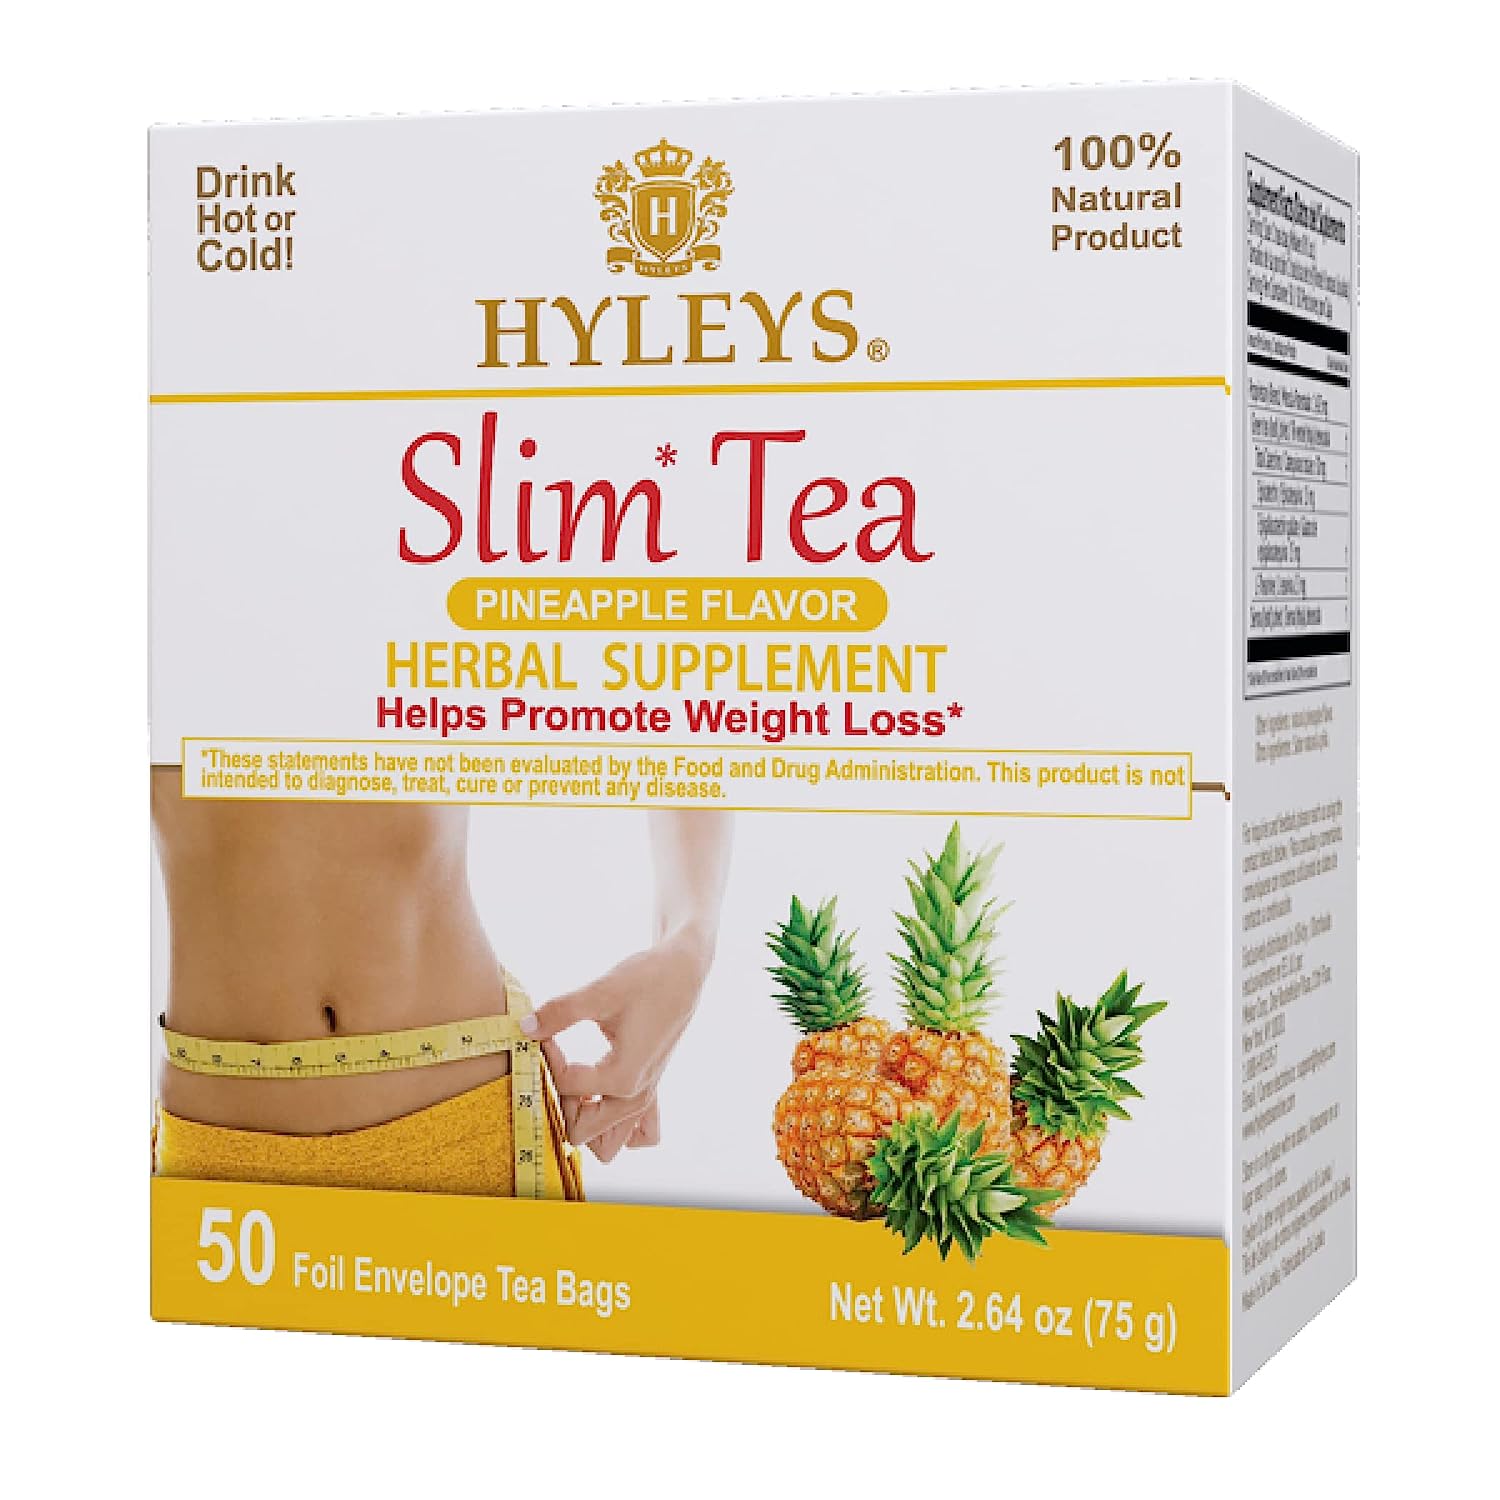 Hyleys-Slim-Tea-Weight-Loss-Herbal-Supplement